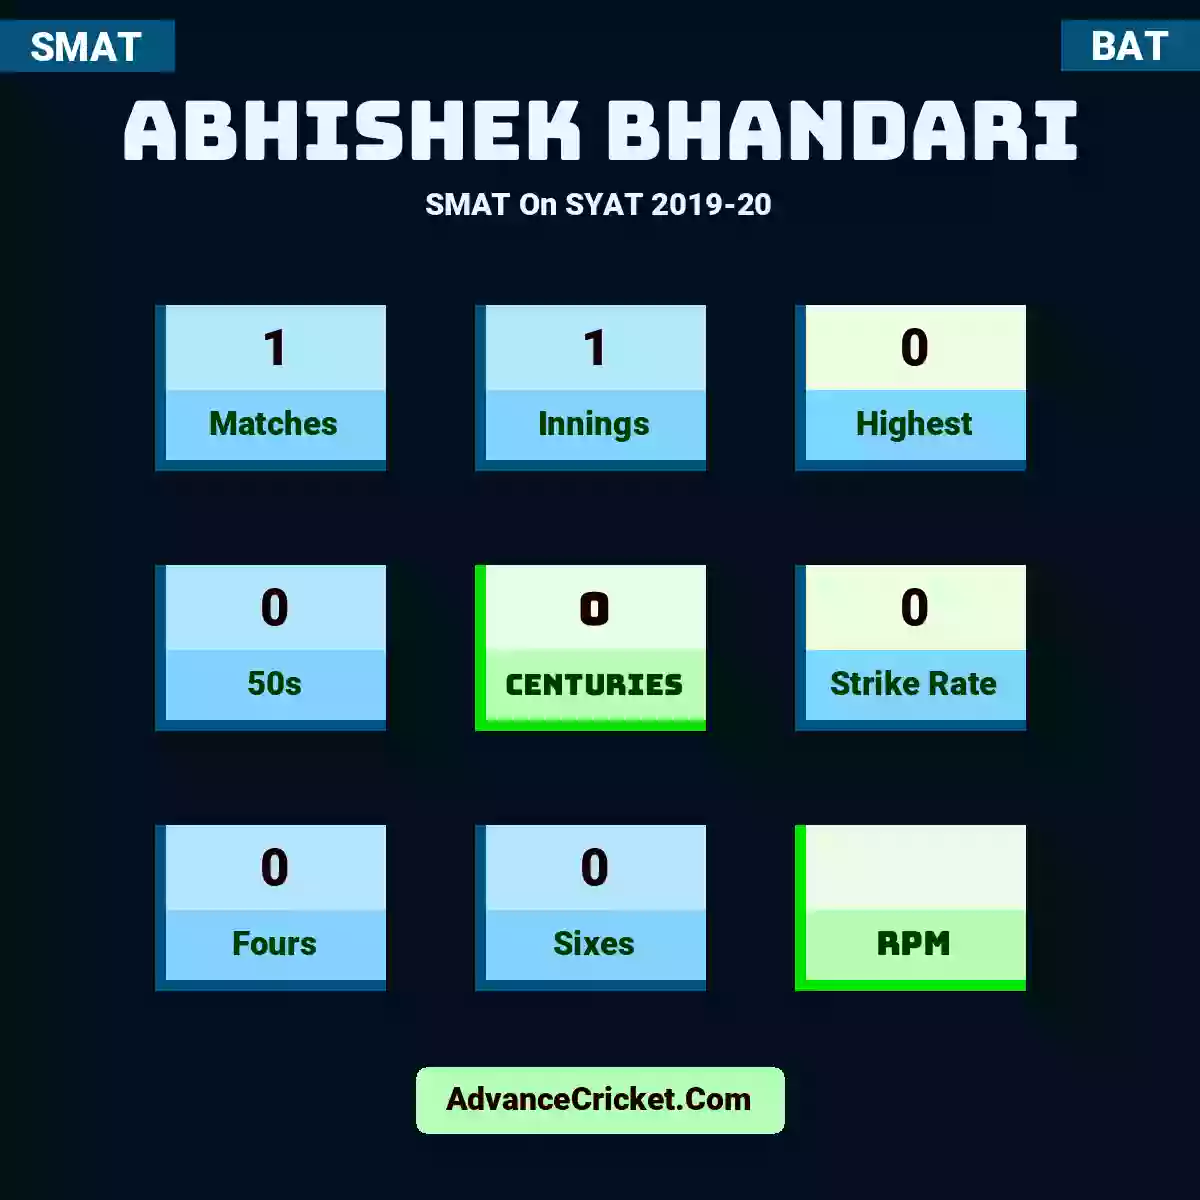 Abhishek Bhandari SMAT  On SYAT 2019-20, Abhishek Bhandari played 1 matches, scored 0 runs as highest, 0 half-centuries, and 0 centuries, with a strike rate of 0. A.Bhandari hit 0 fours and 0 sixes.